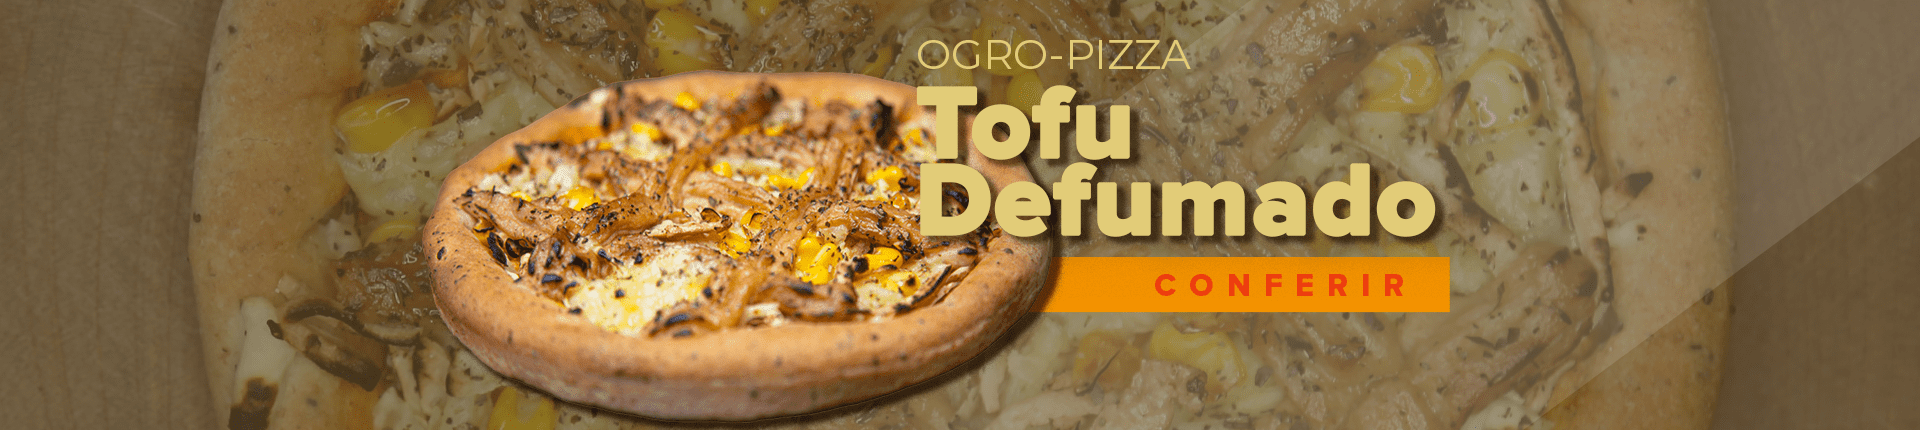 Ogro-Pizza Tofu Defumado